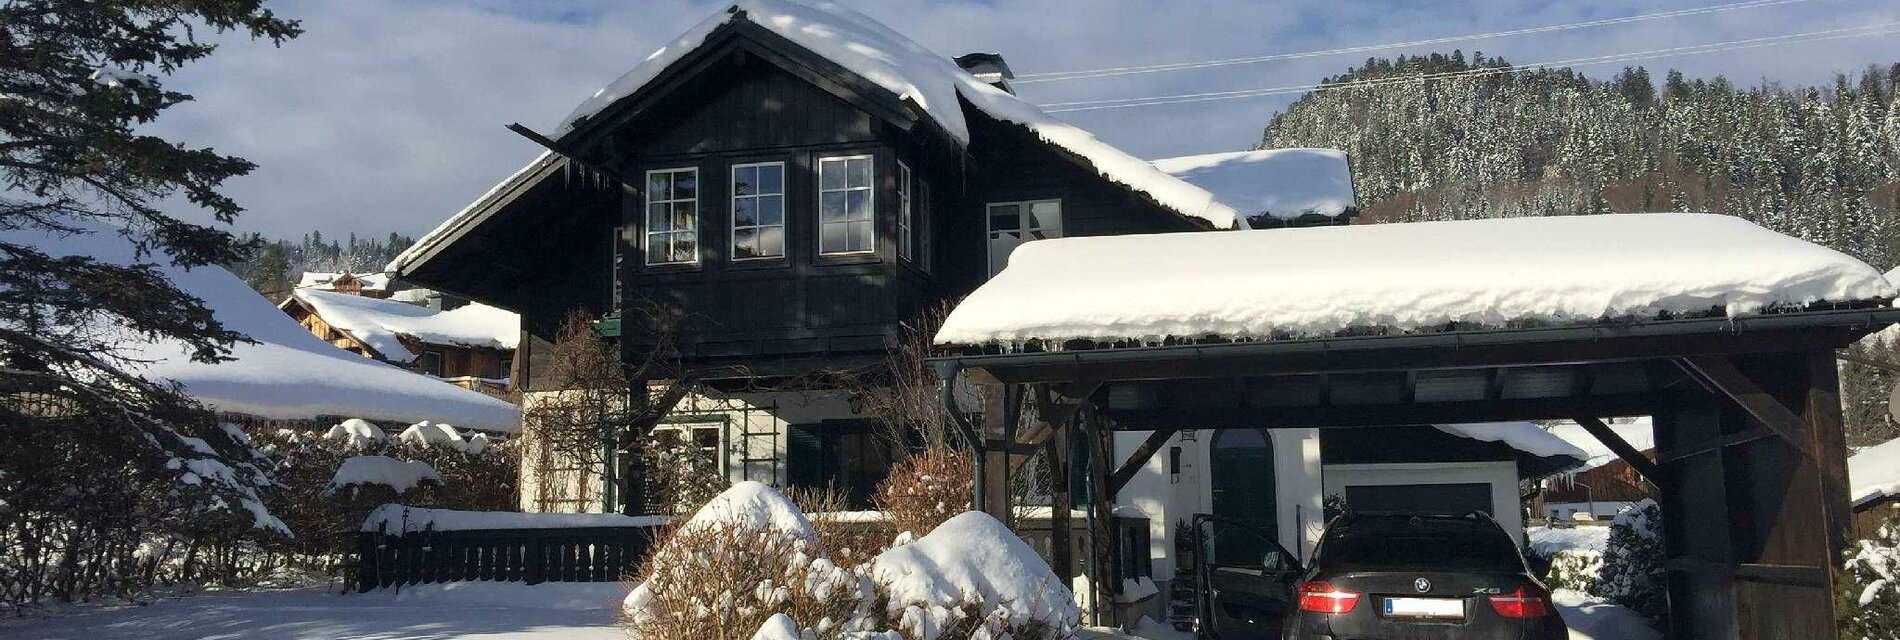 Villa Loserblick, Altaussee, Winter